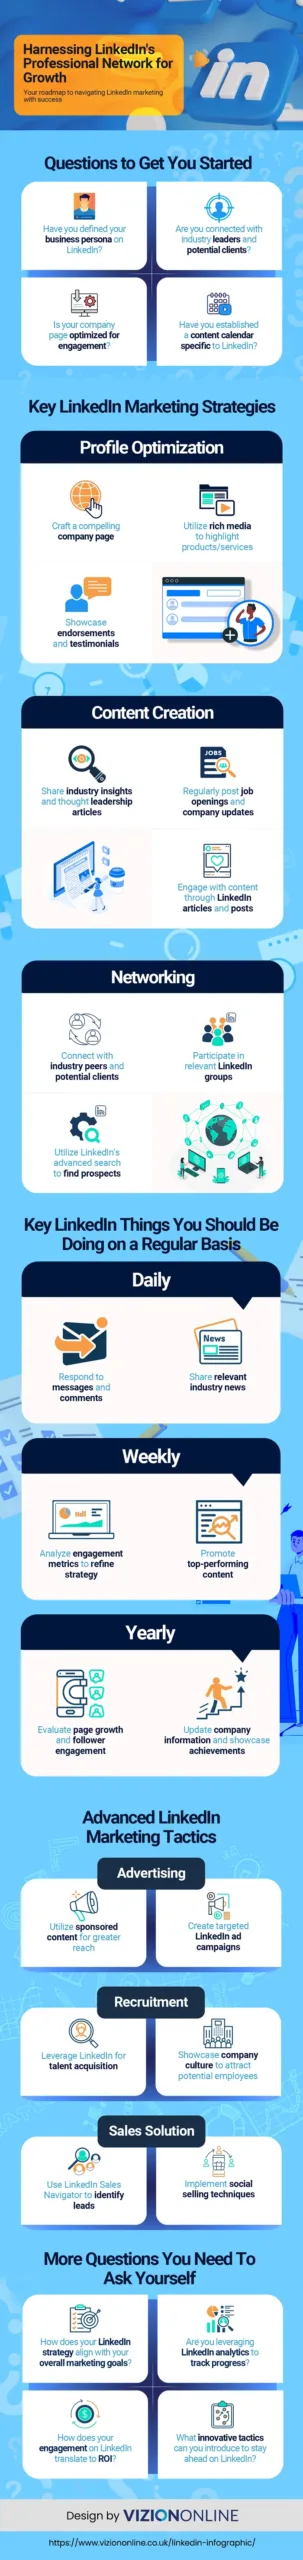 LinkedIn tips infographic